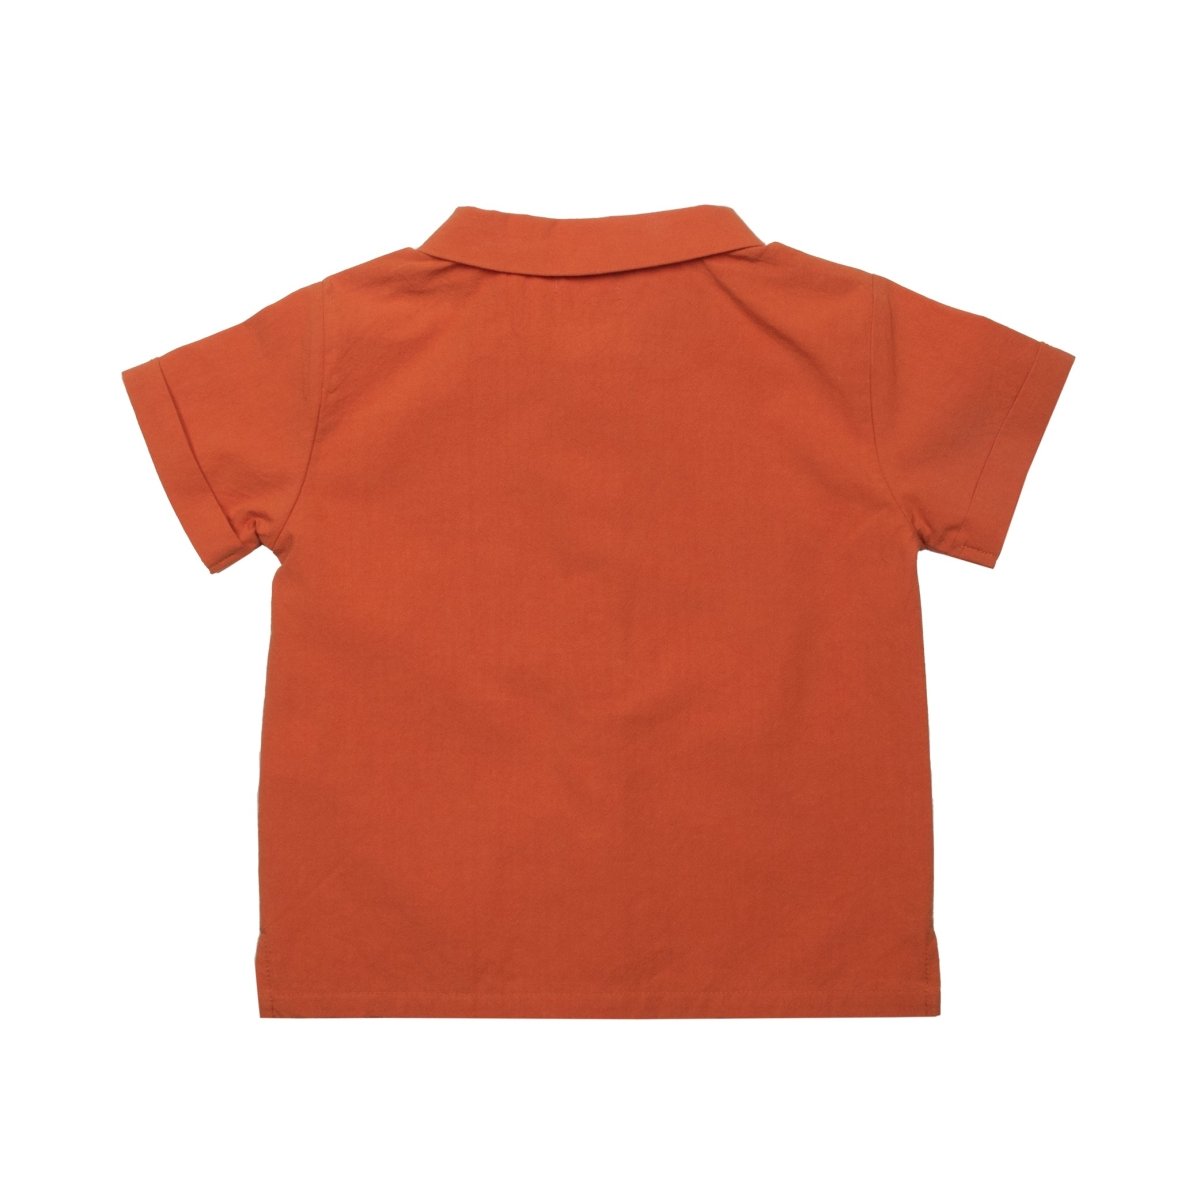 Paper Woven Baby Shirt - Suuky Porto